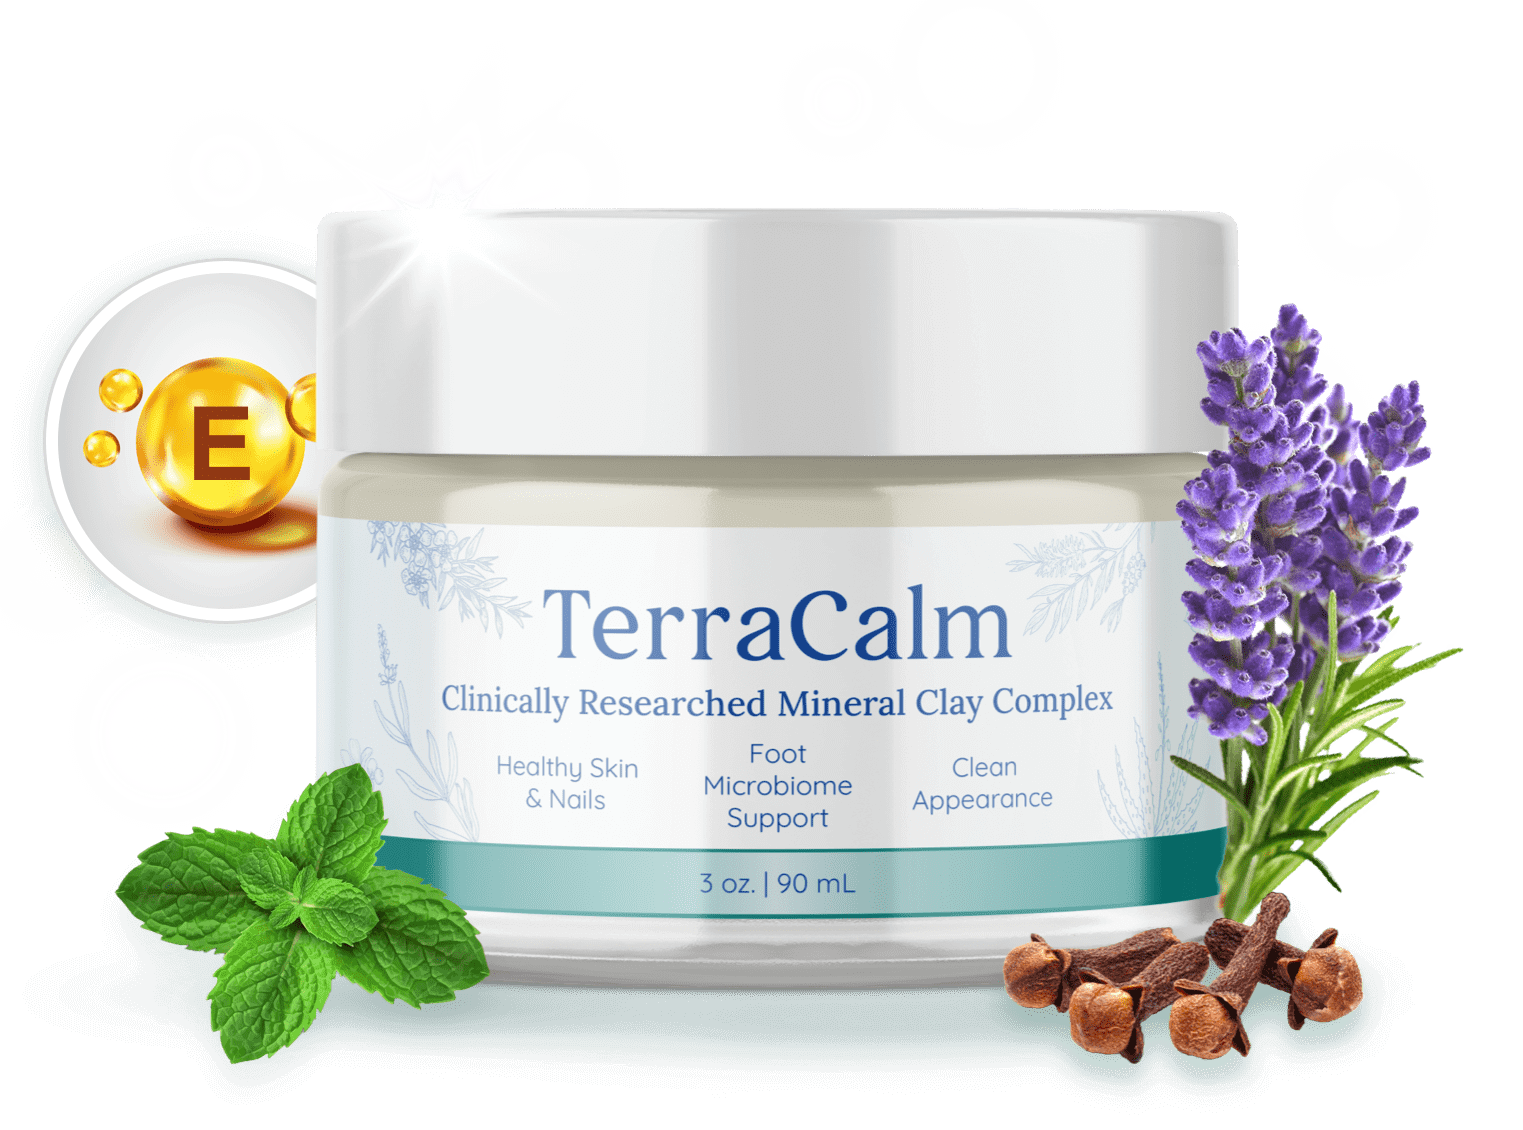 TerraCalm cream